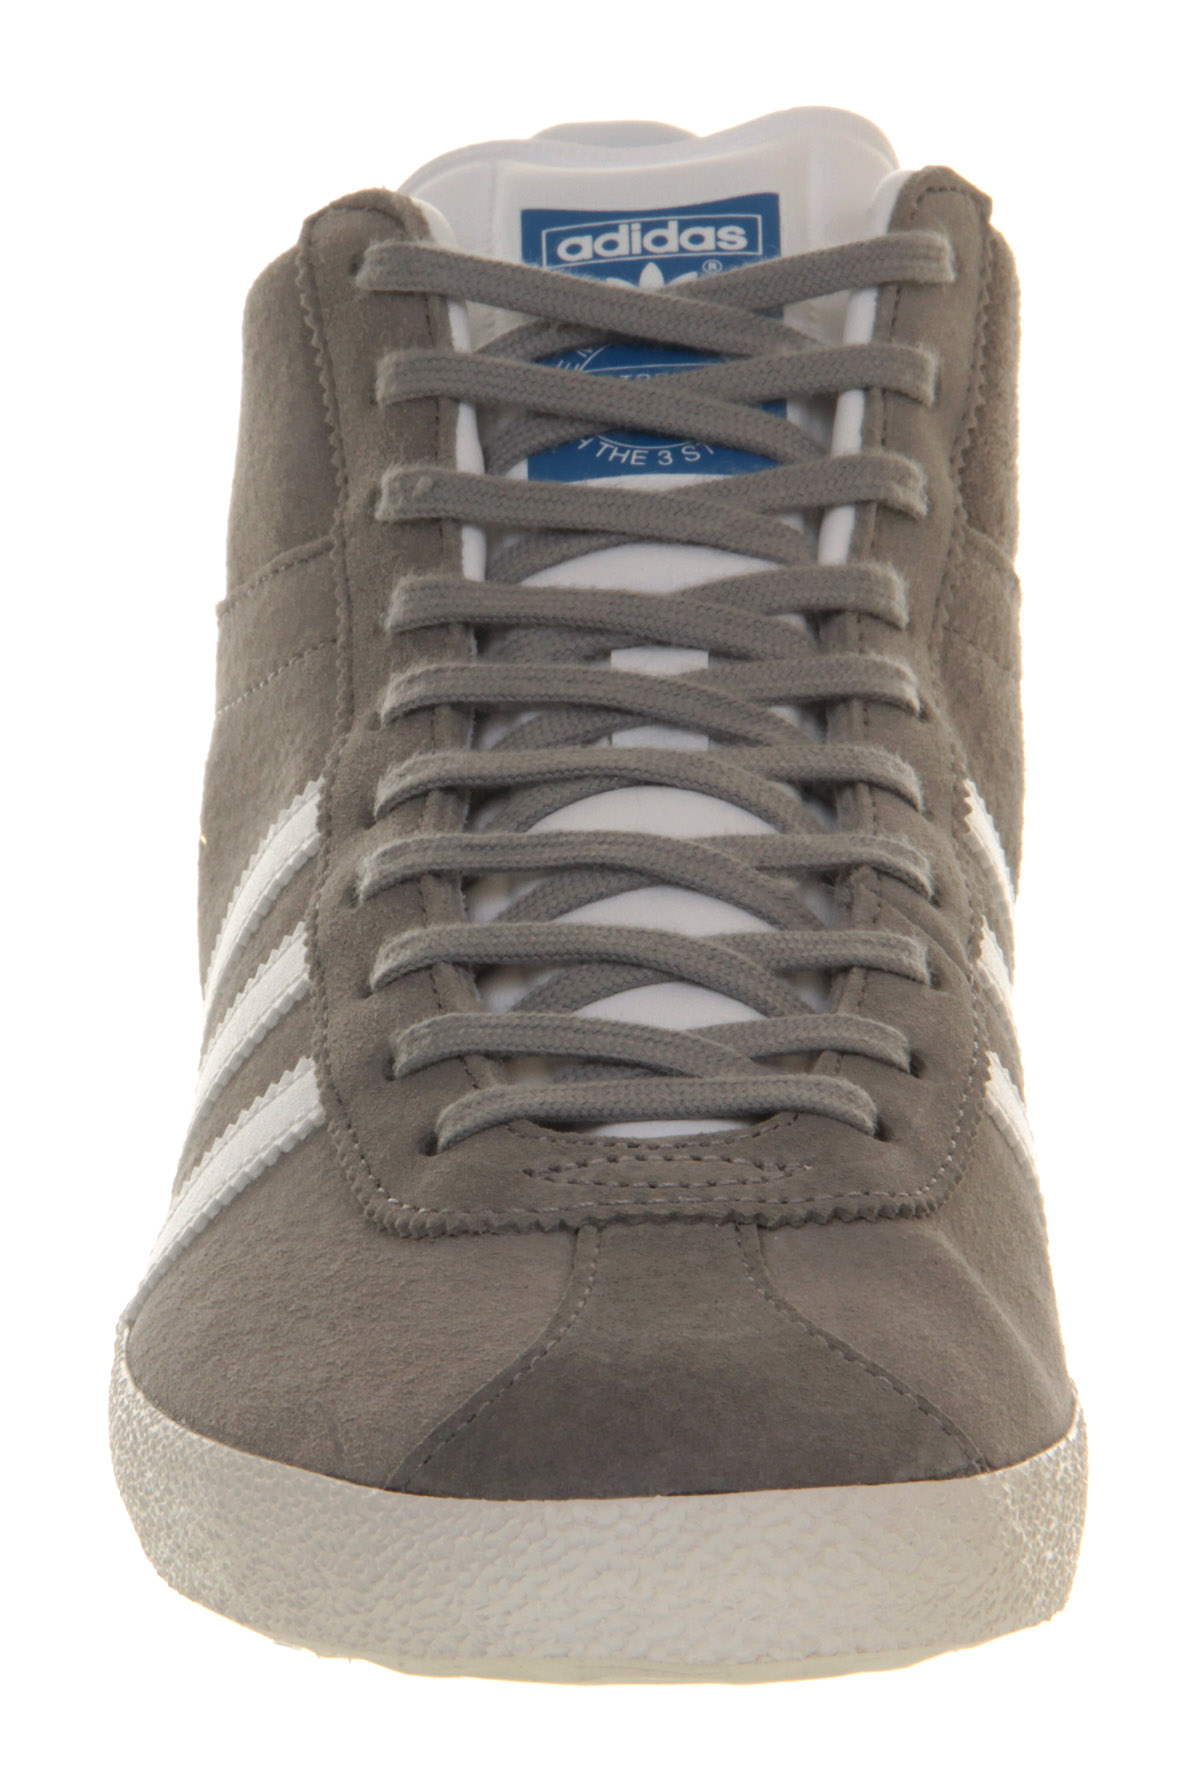 adidas Originals Gazelle Mid in Grey (Gray) - Lyst